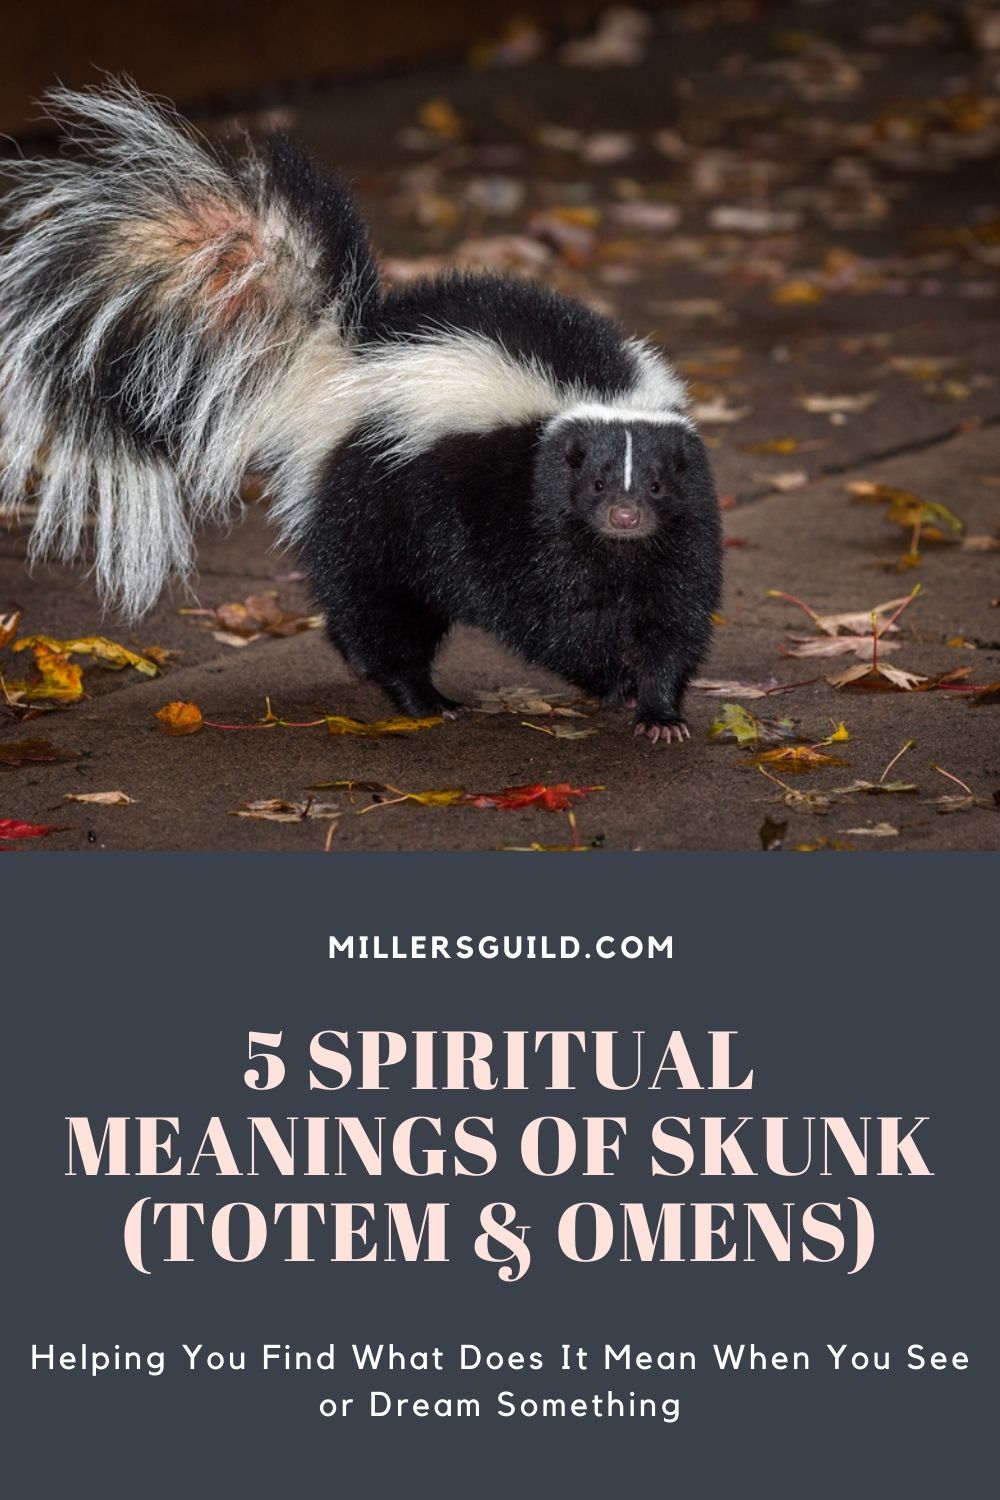 5 Spiritual Meanings of Skunk (Totem & Omens) 2